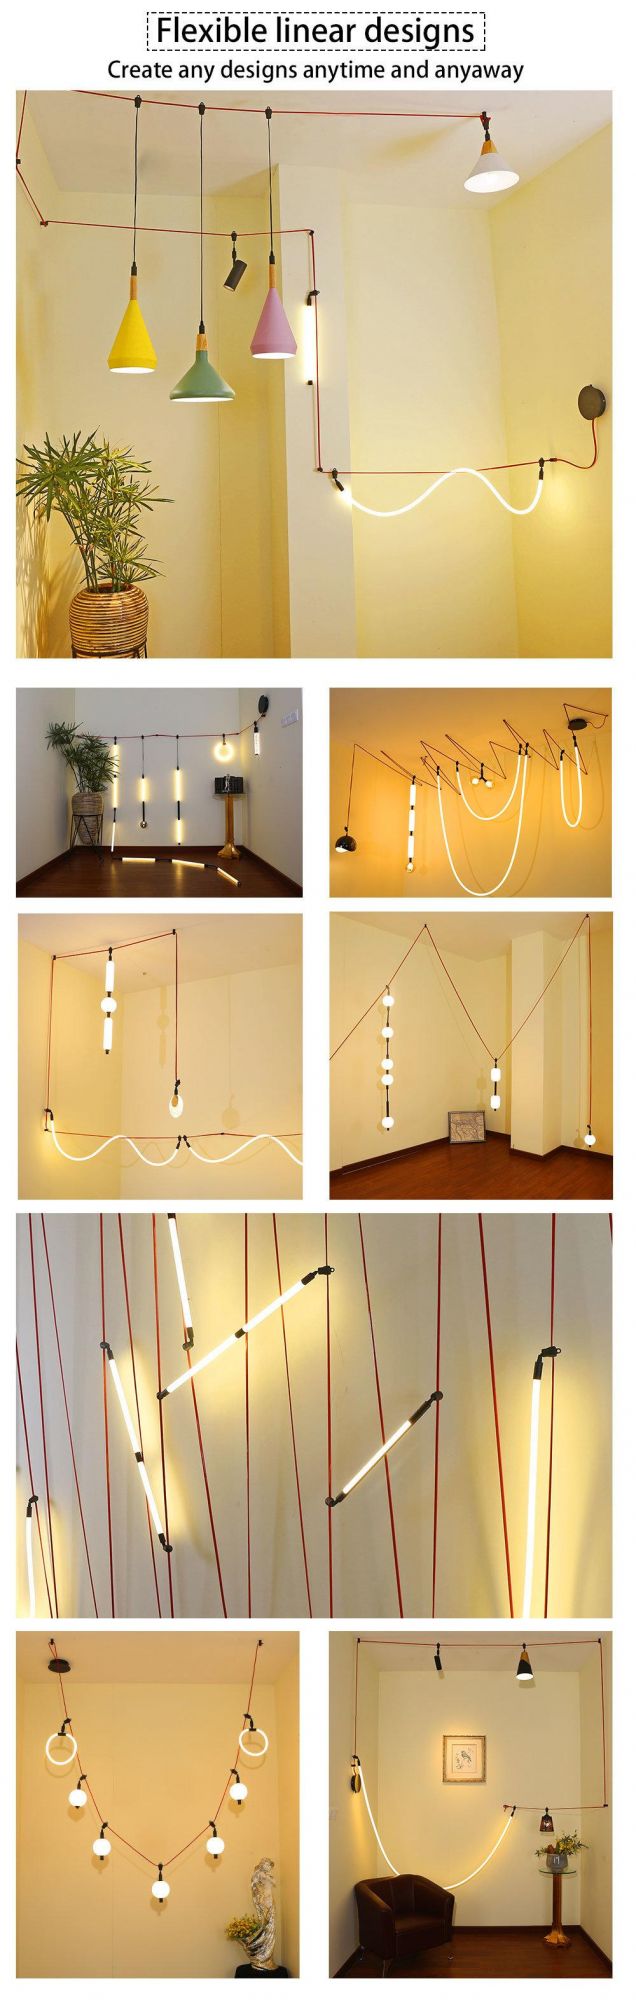 LED Indoor Designer Flexible Linear Lighting Lights3000K/6000K Glass Acrylic Shade Decoration Chandelier Pendant Ceiling Spot Track Lamp Light